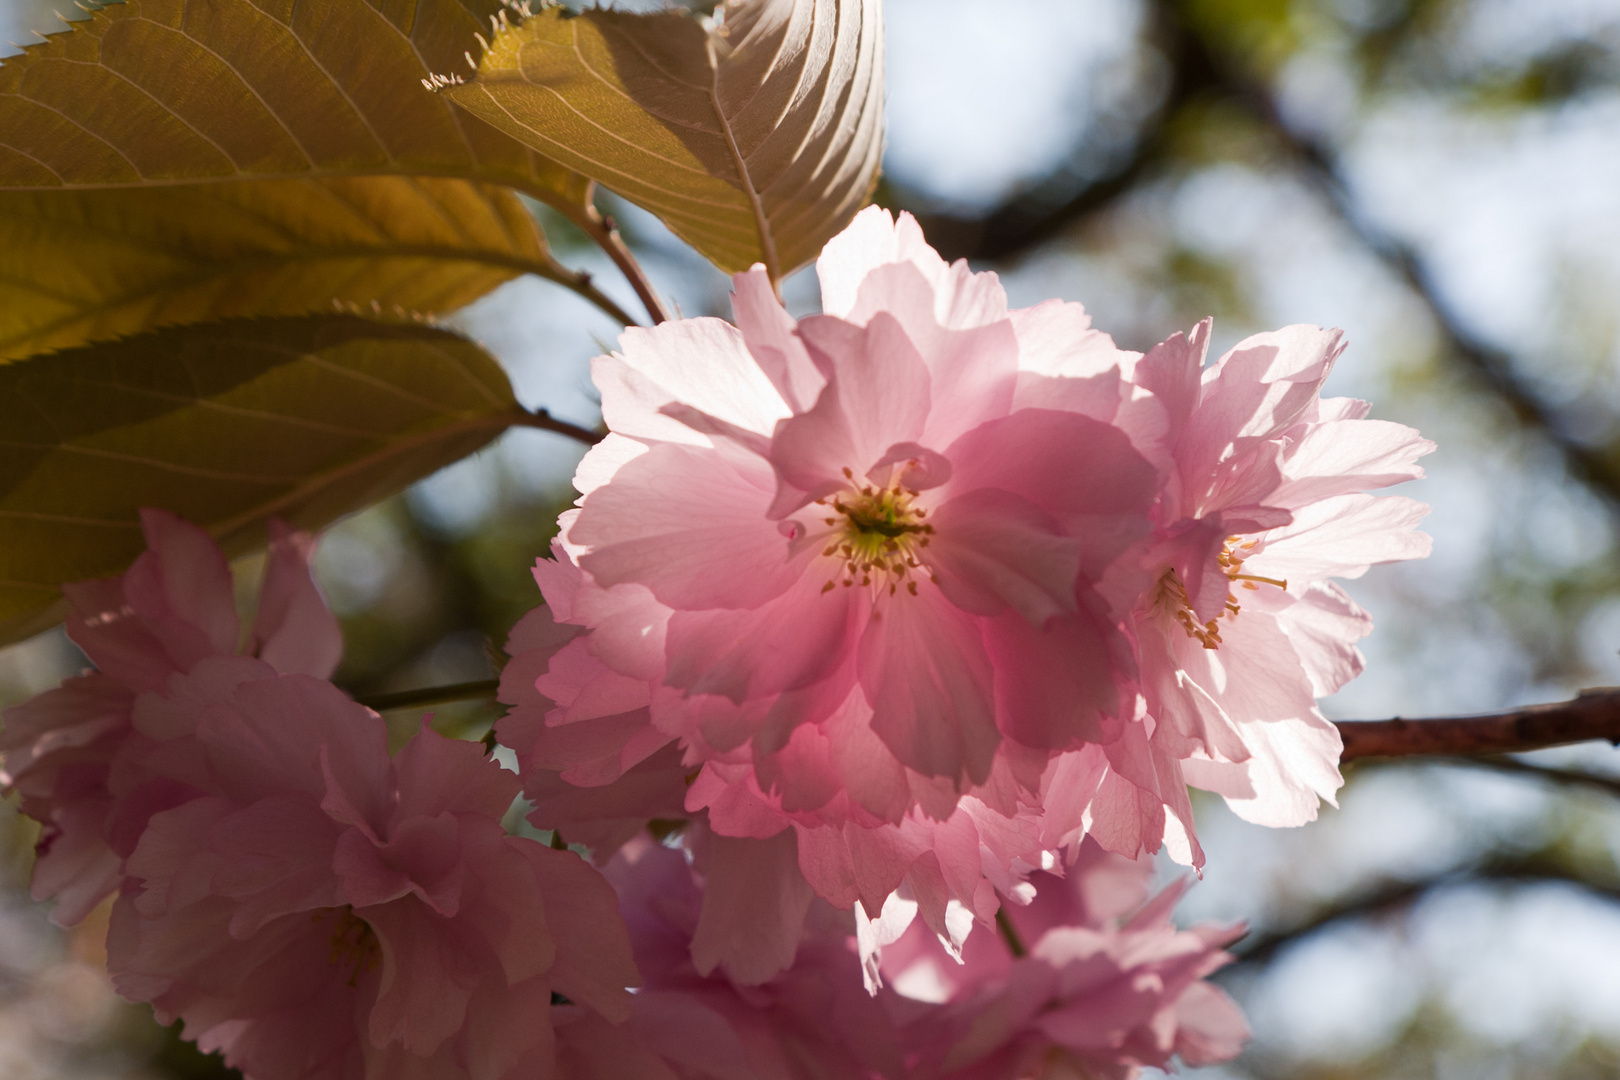 Leuchtender Frühlingsgruß aus Bruchsal in Rosa ...